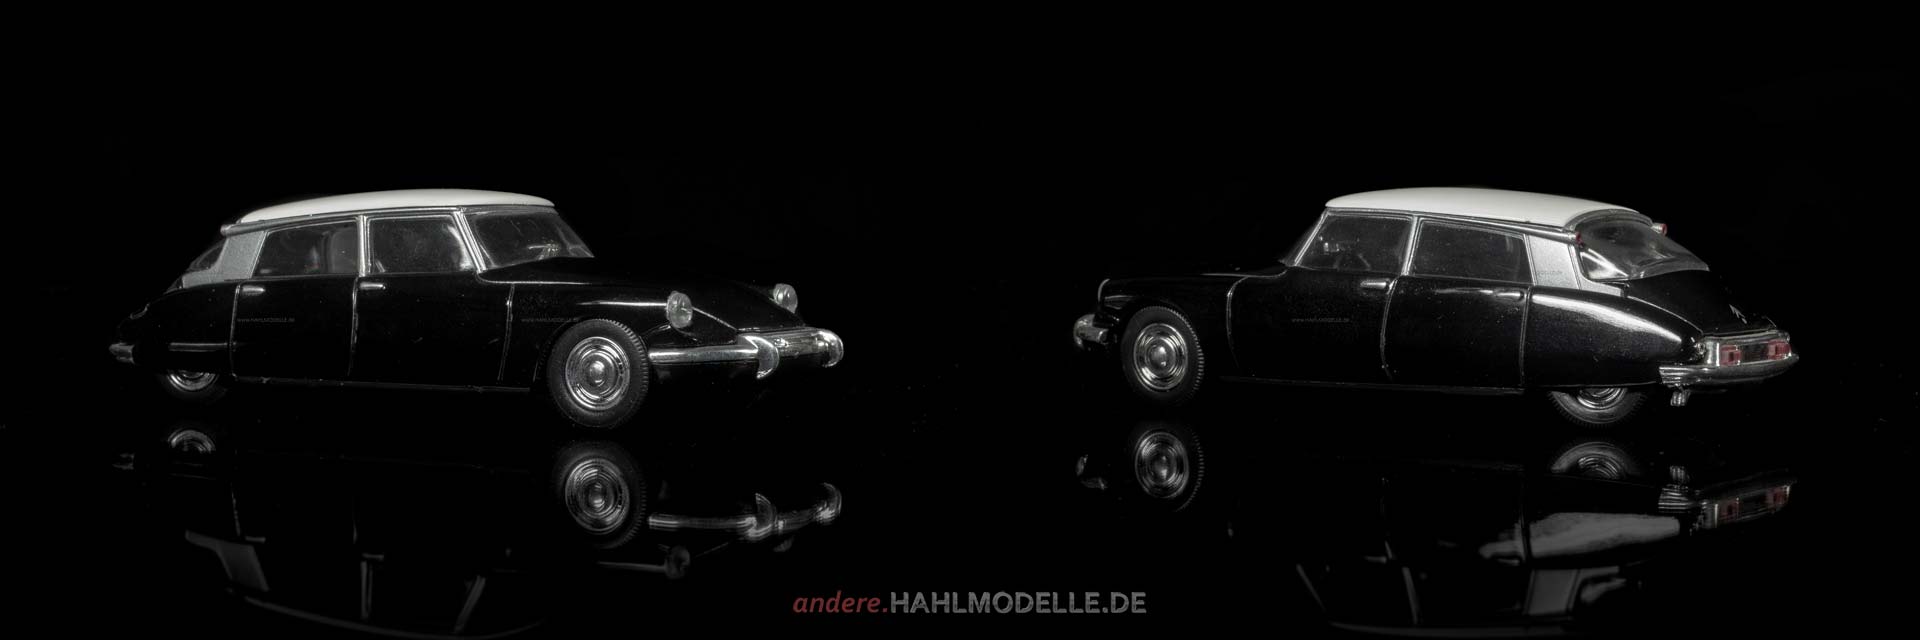 Citroën DS 19 | Limousine | Ixo (Del Prado Car Collection) | 1:43 | www.andere.hahlmodelle.de